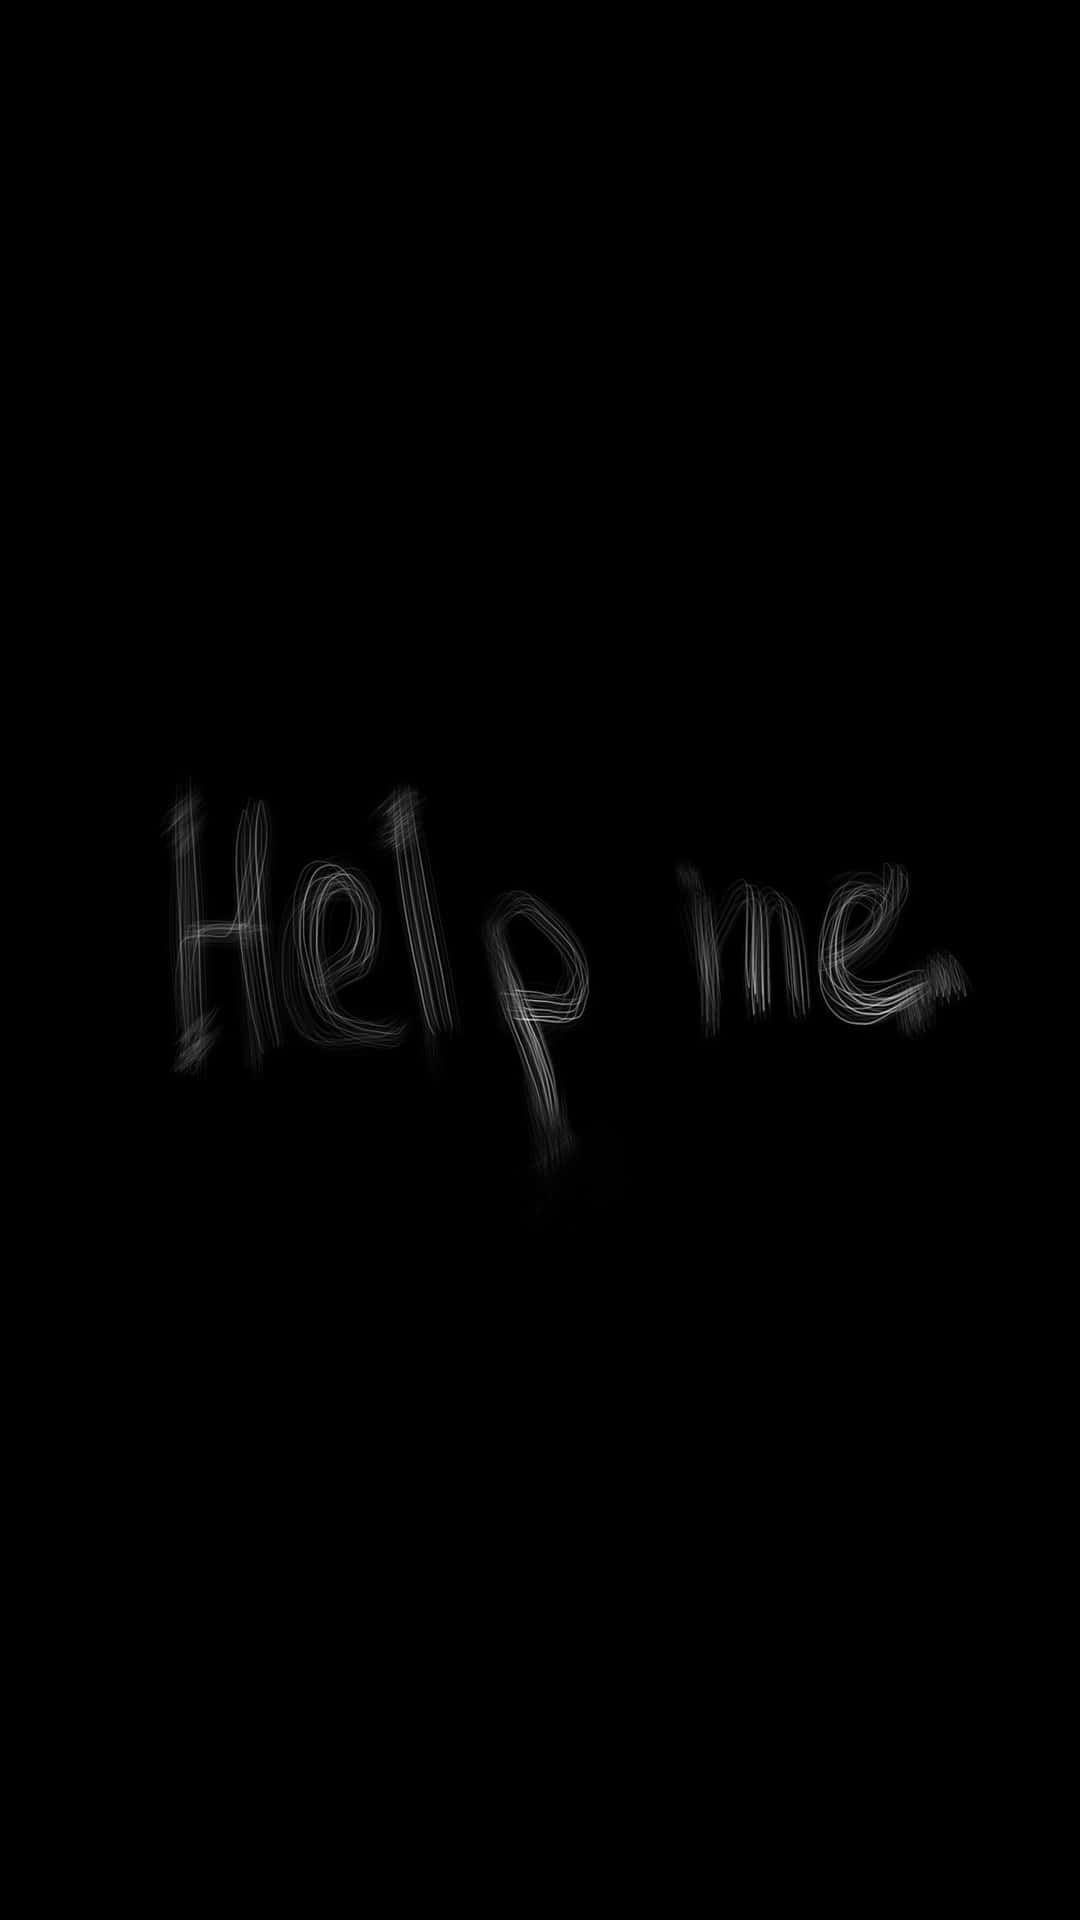 Help Me Written On A Black Background